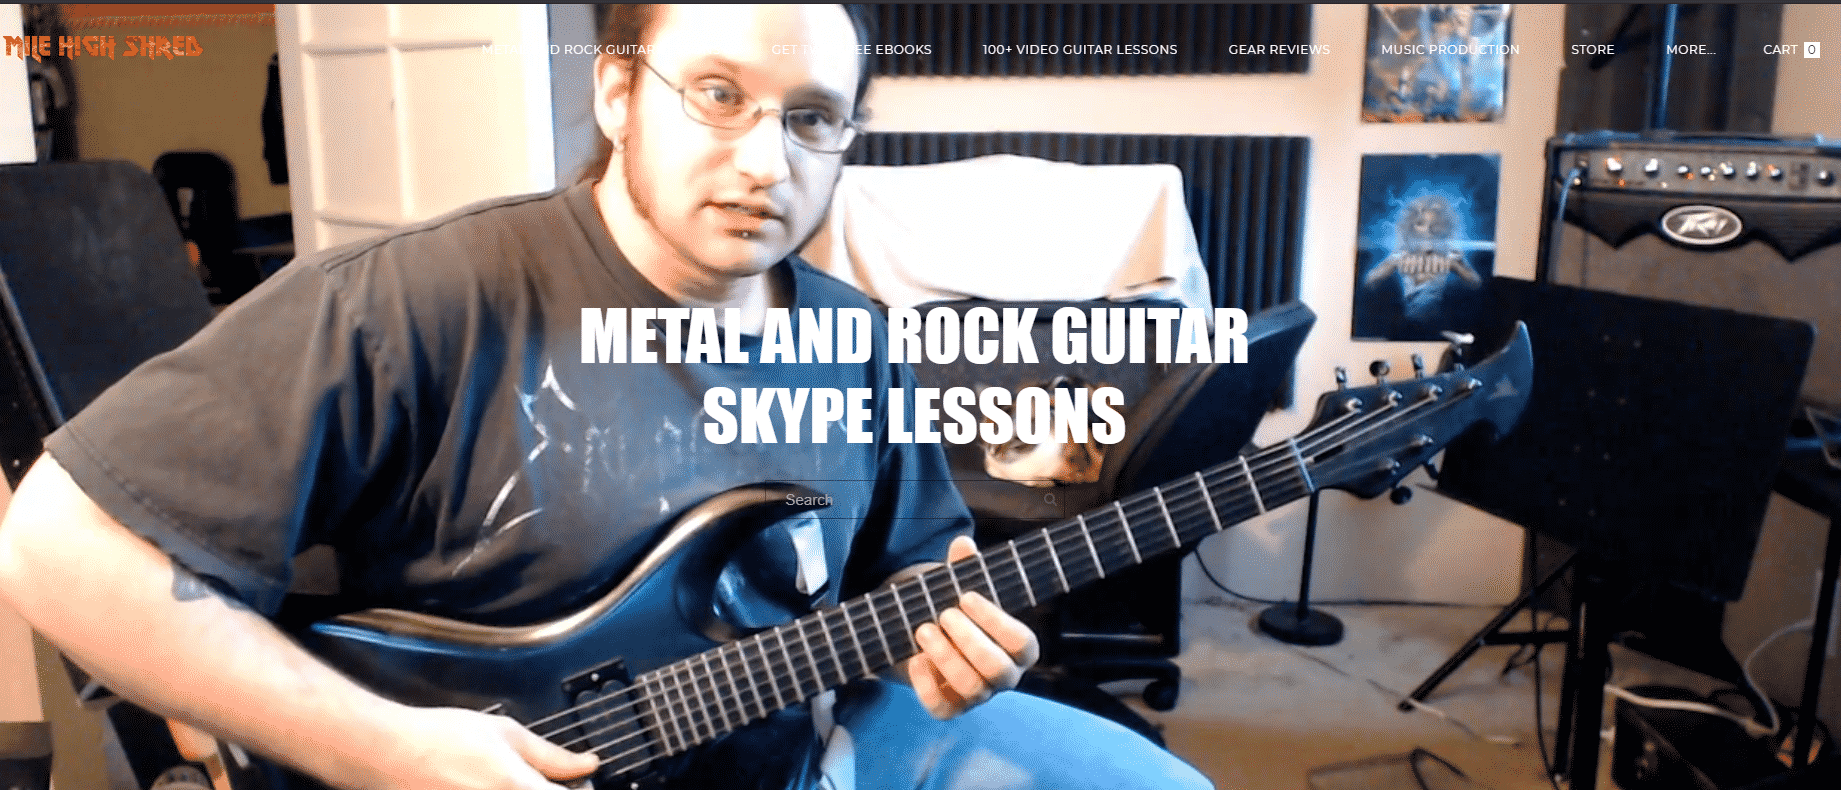 milehighshred learn hard rock metal guitar lessons online